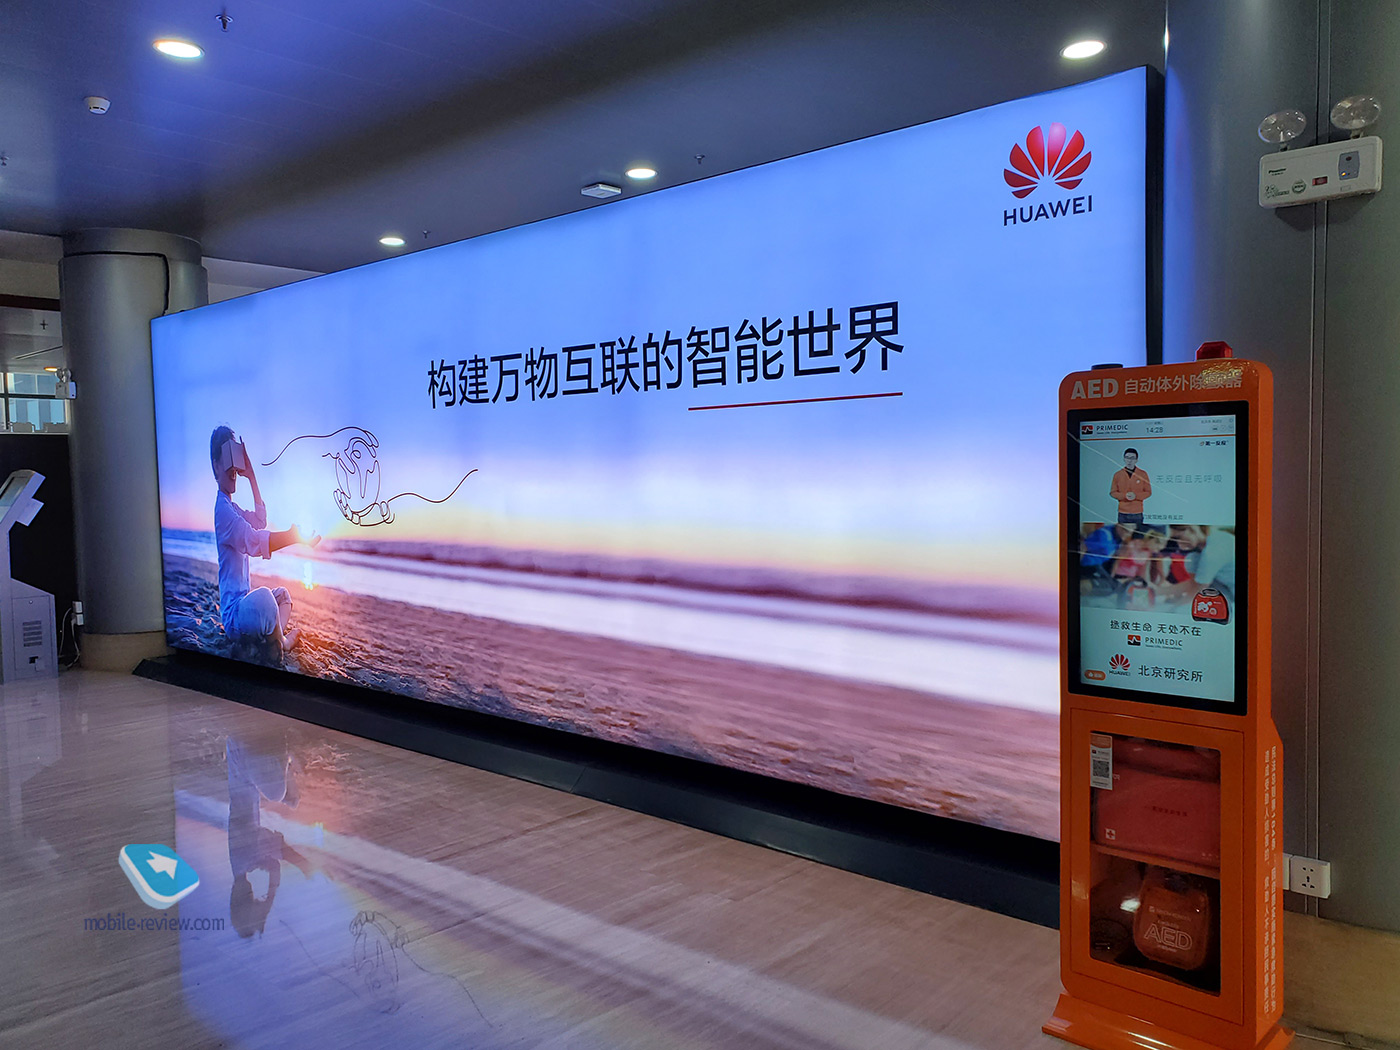 Как устроен центр разработок и тестирования Huawei в Пекине